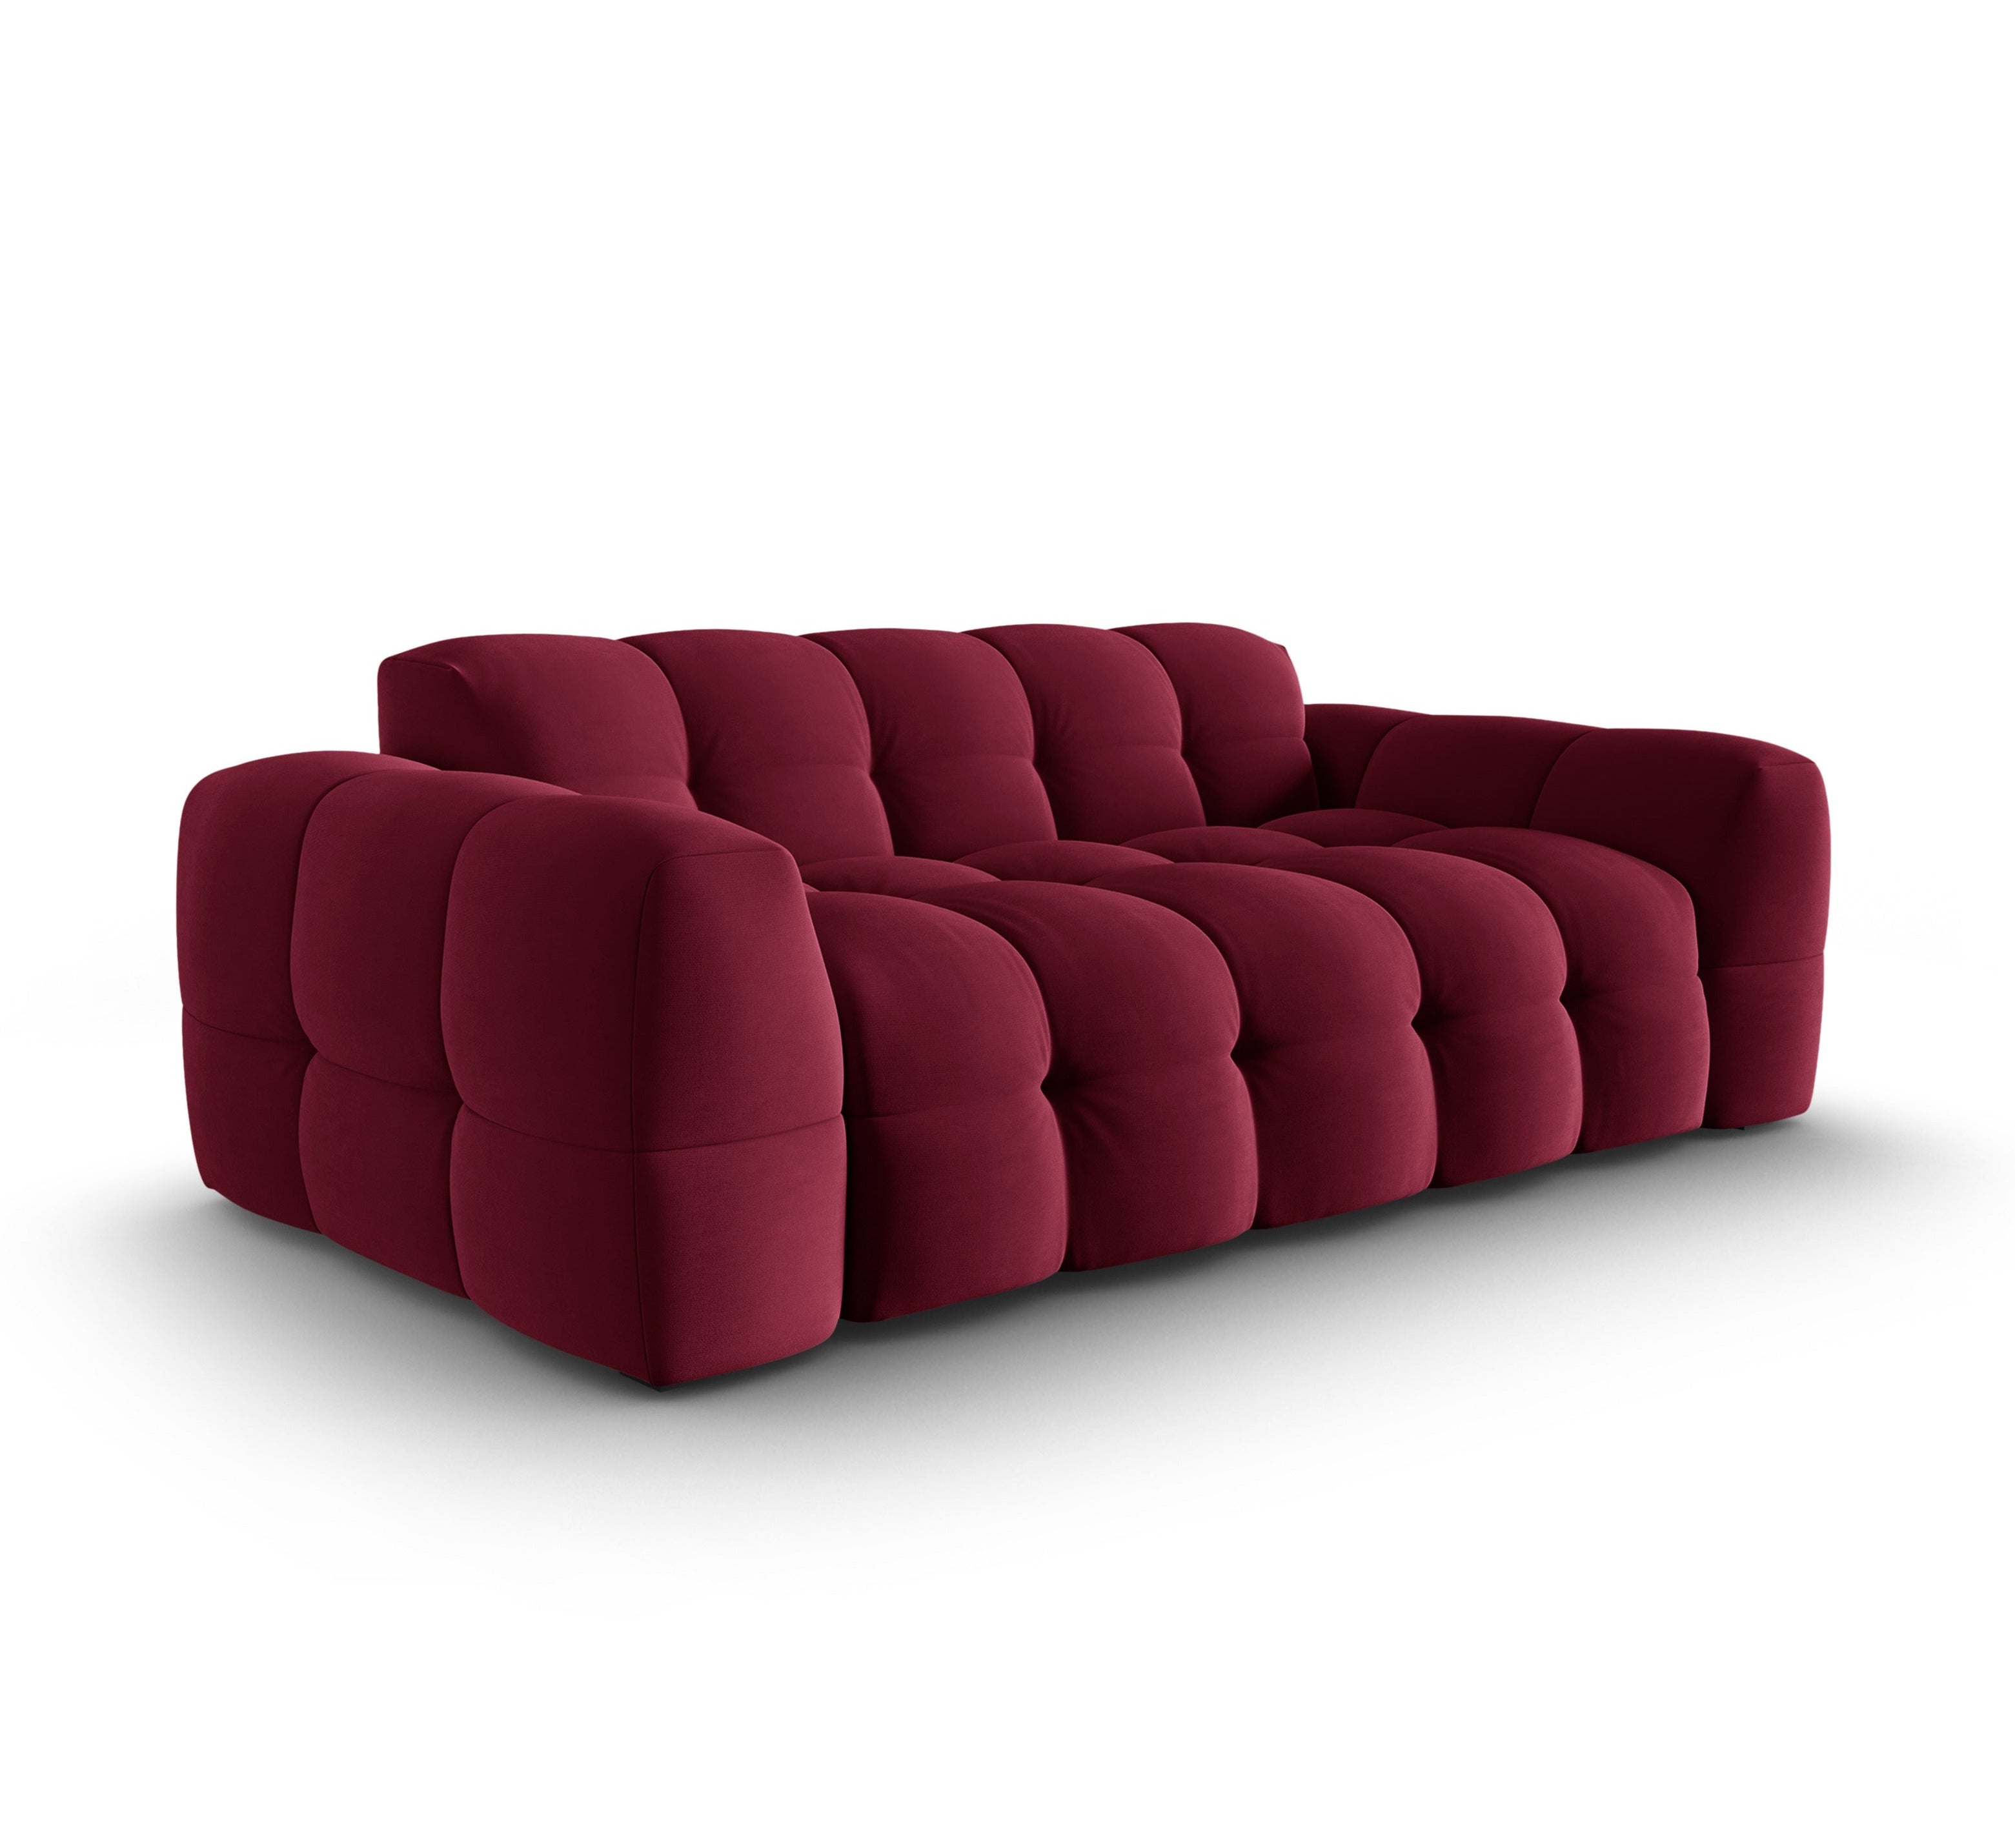 Velvet Sofa, "Nino", 2 Seats, 208x105x68
Made in Europe, Maison Heritage, Eye on Design